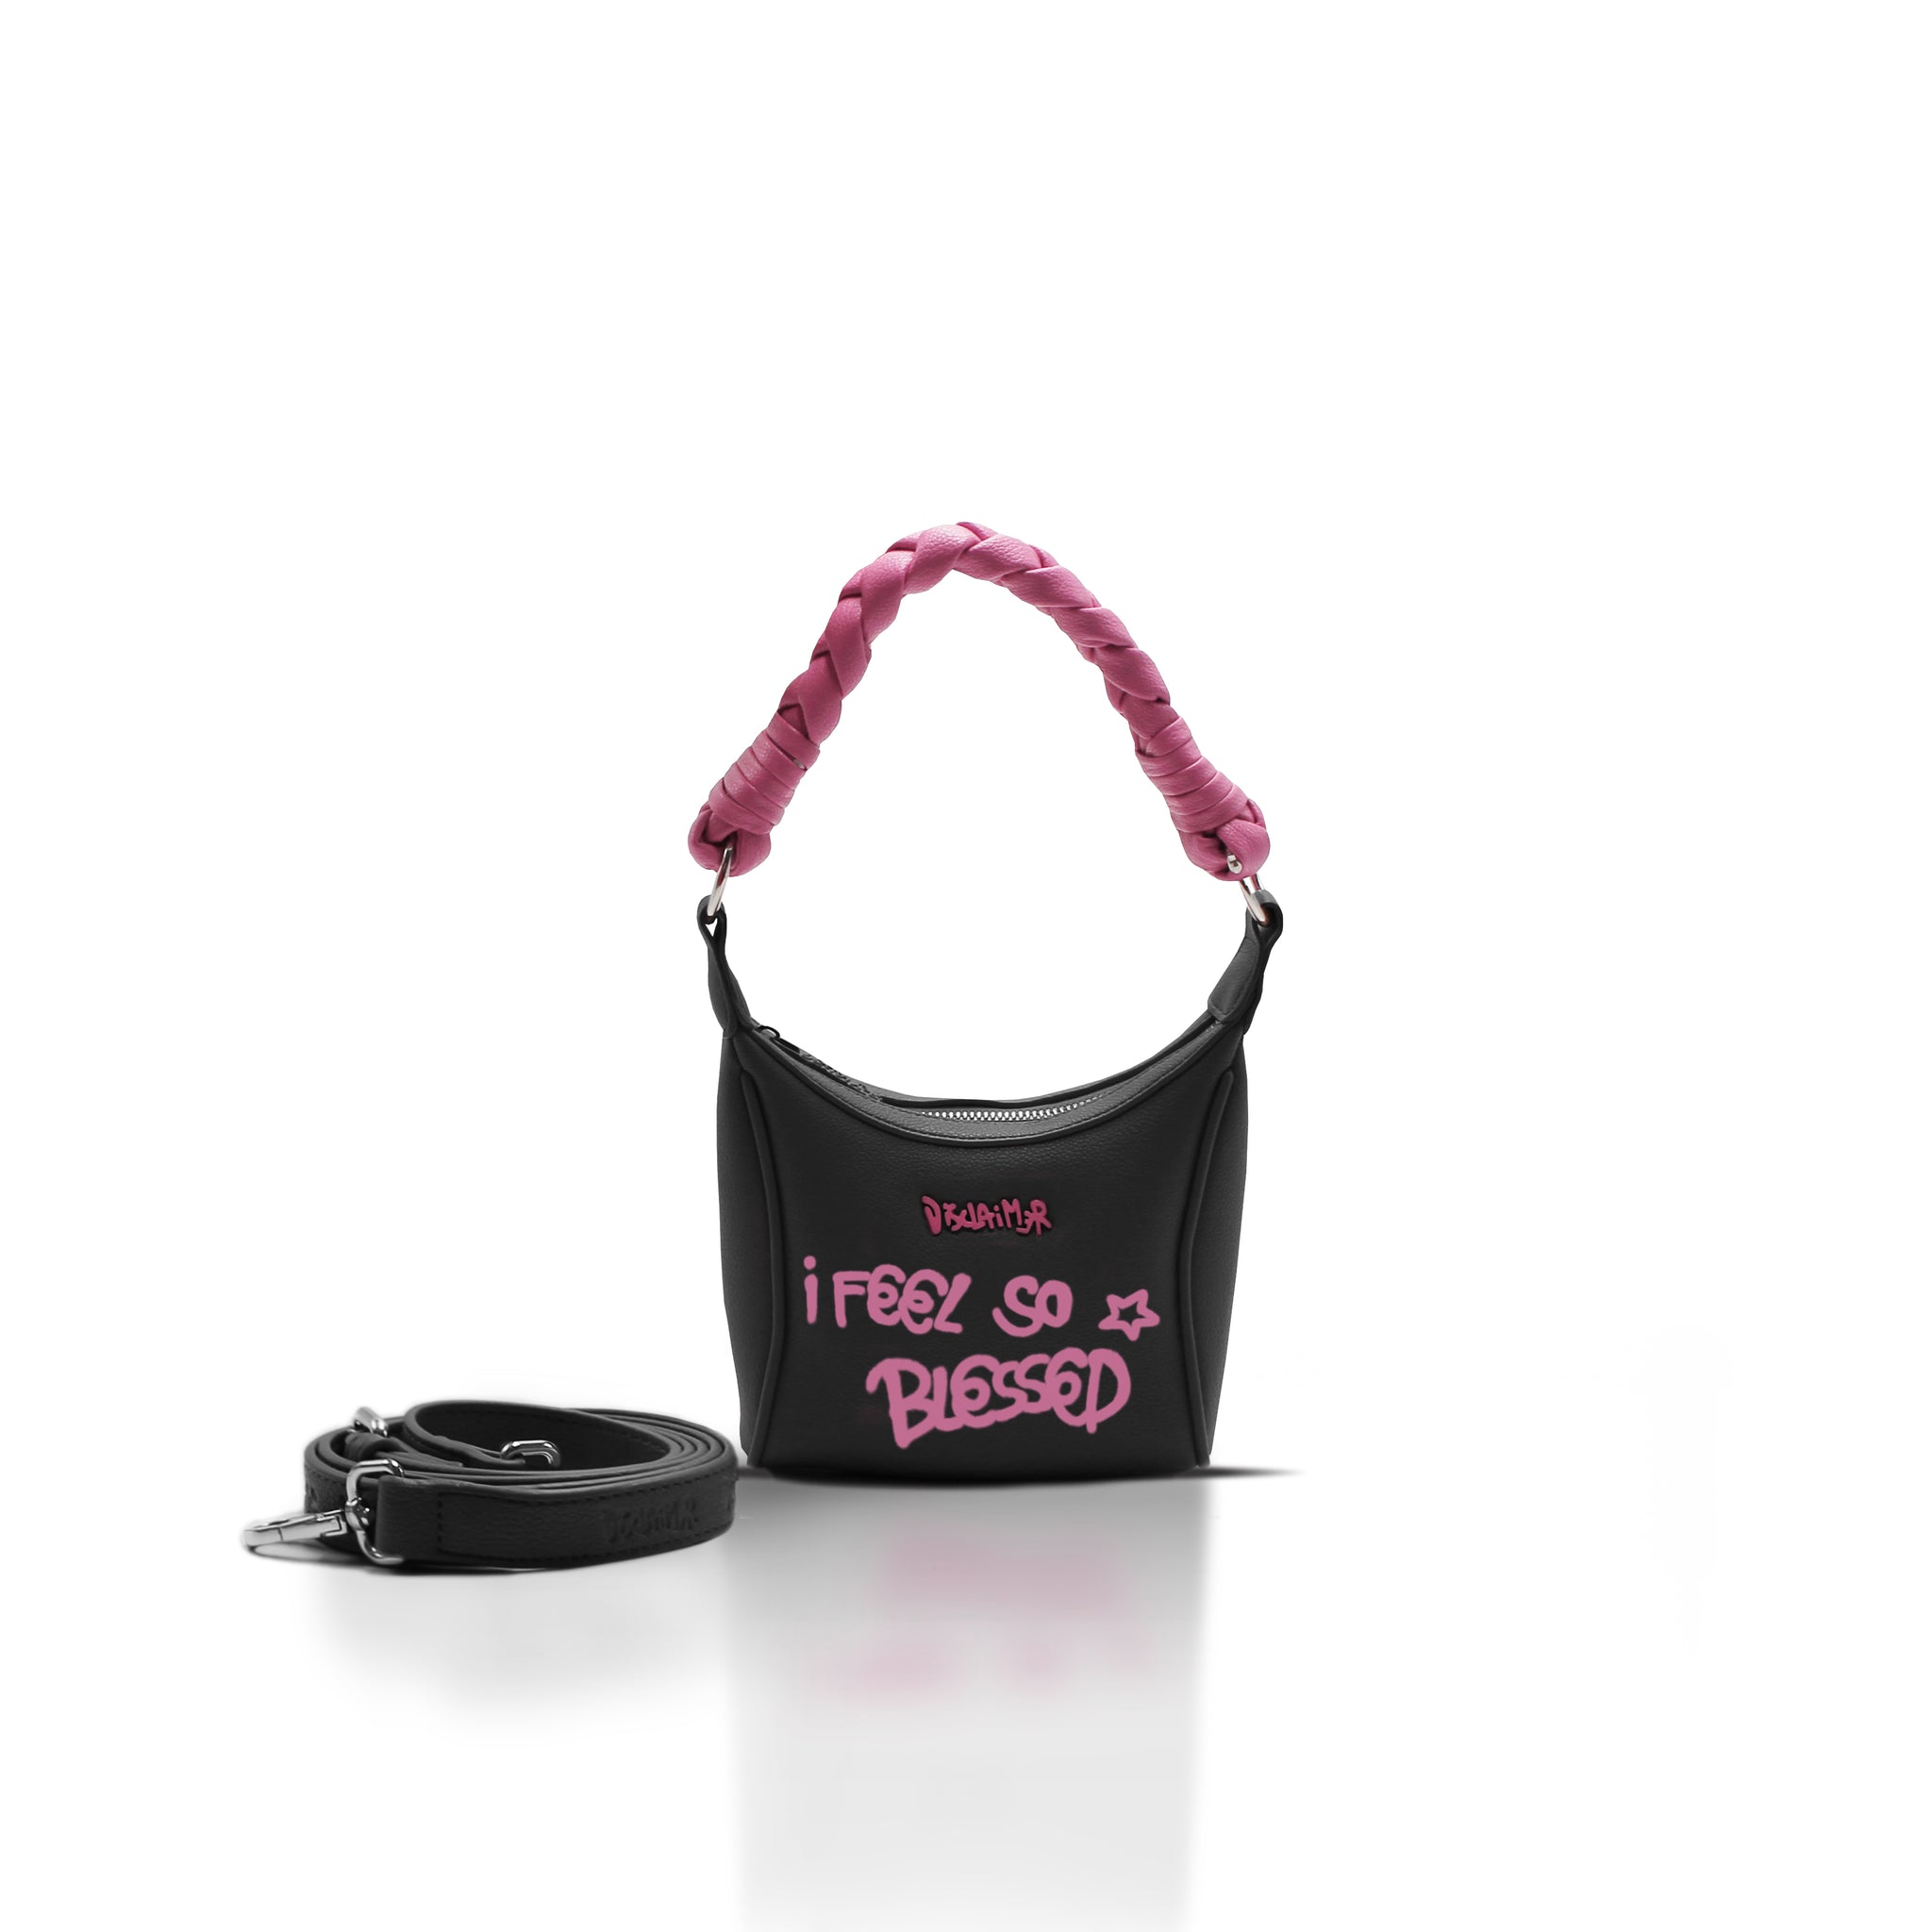 Mini bag in black / pink eco leather